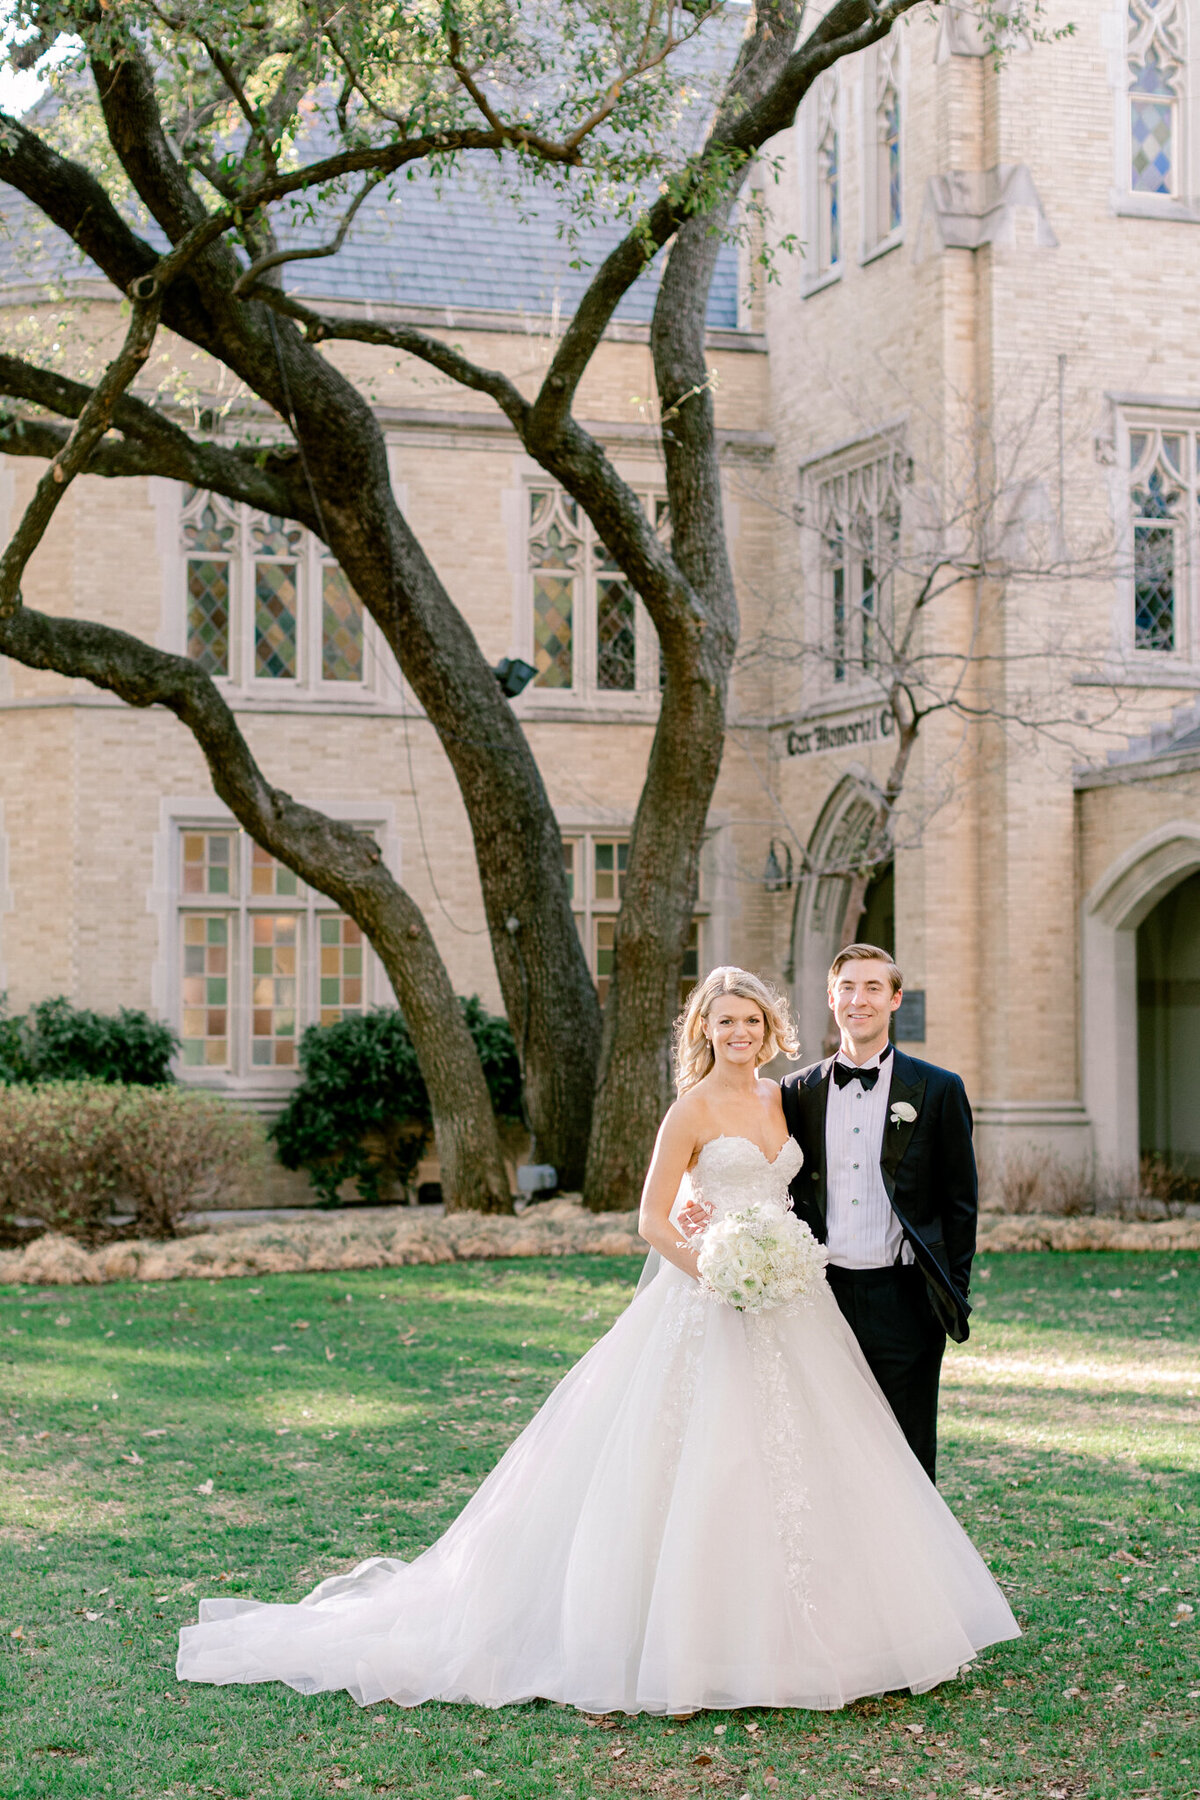 Shelby & Thomas's Wedding at HPUMC The Room on Main | Dallas Wedding Photographer | Sami Kathryn Photography-1